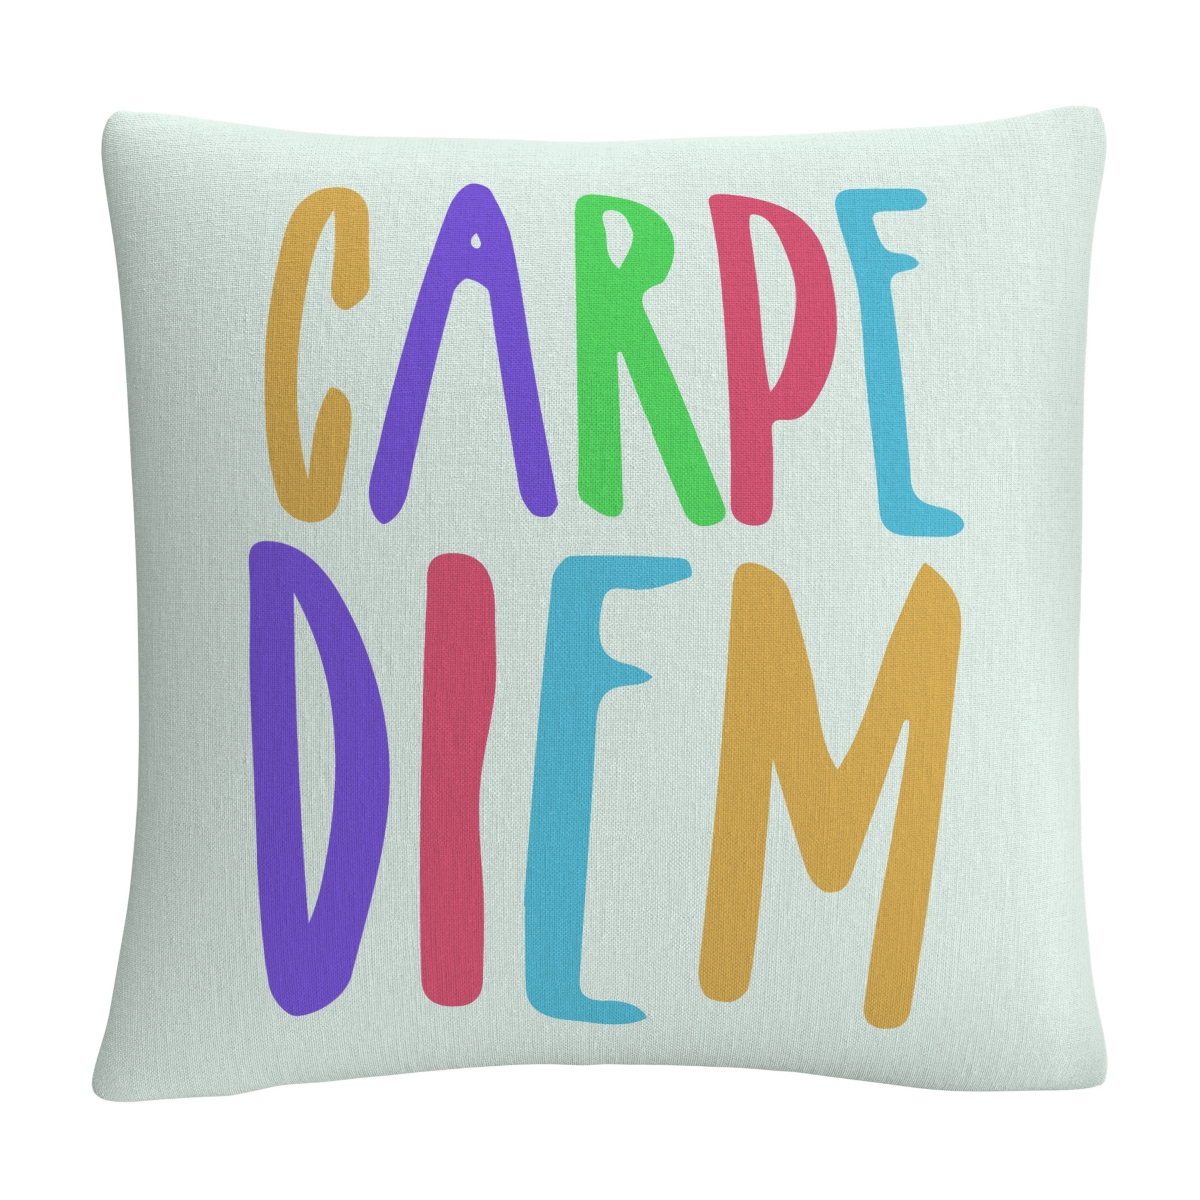 Abc Typographic Modern Carpe Diem Color Decorative Pillow, 16 x 16